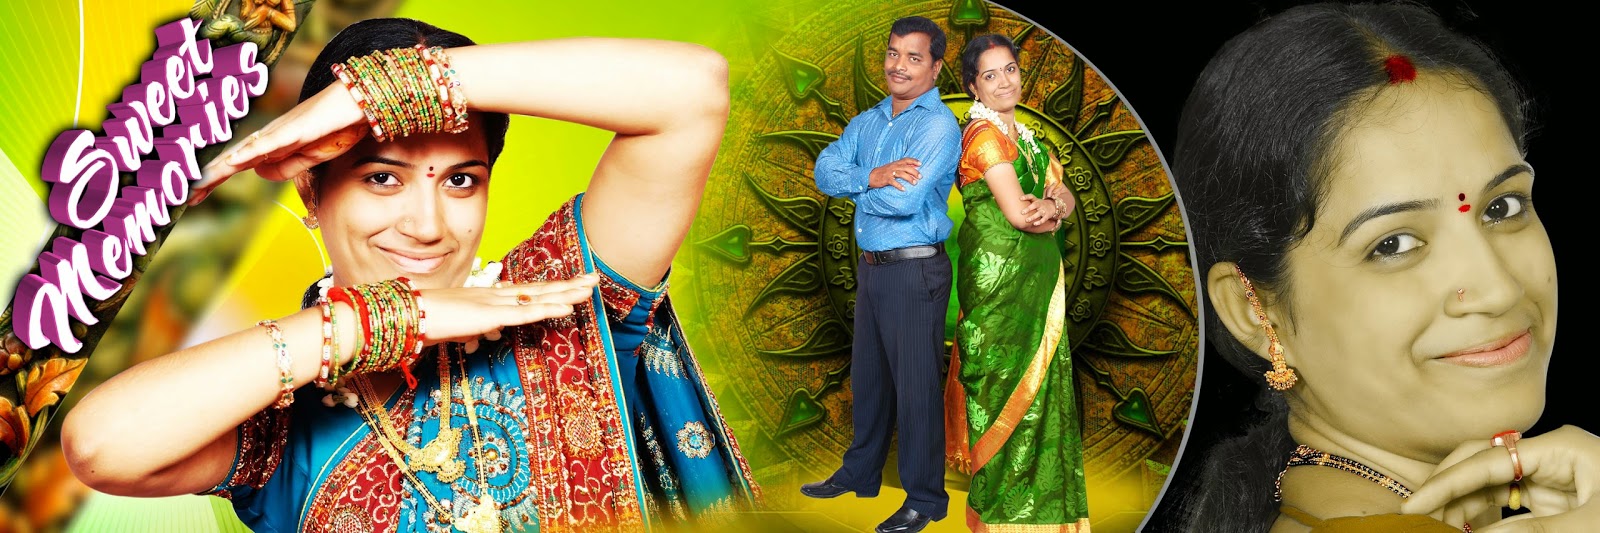 12x36 Indian Wedding Album Psd File Free Downloads Online